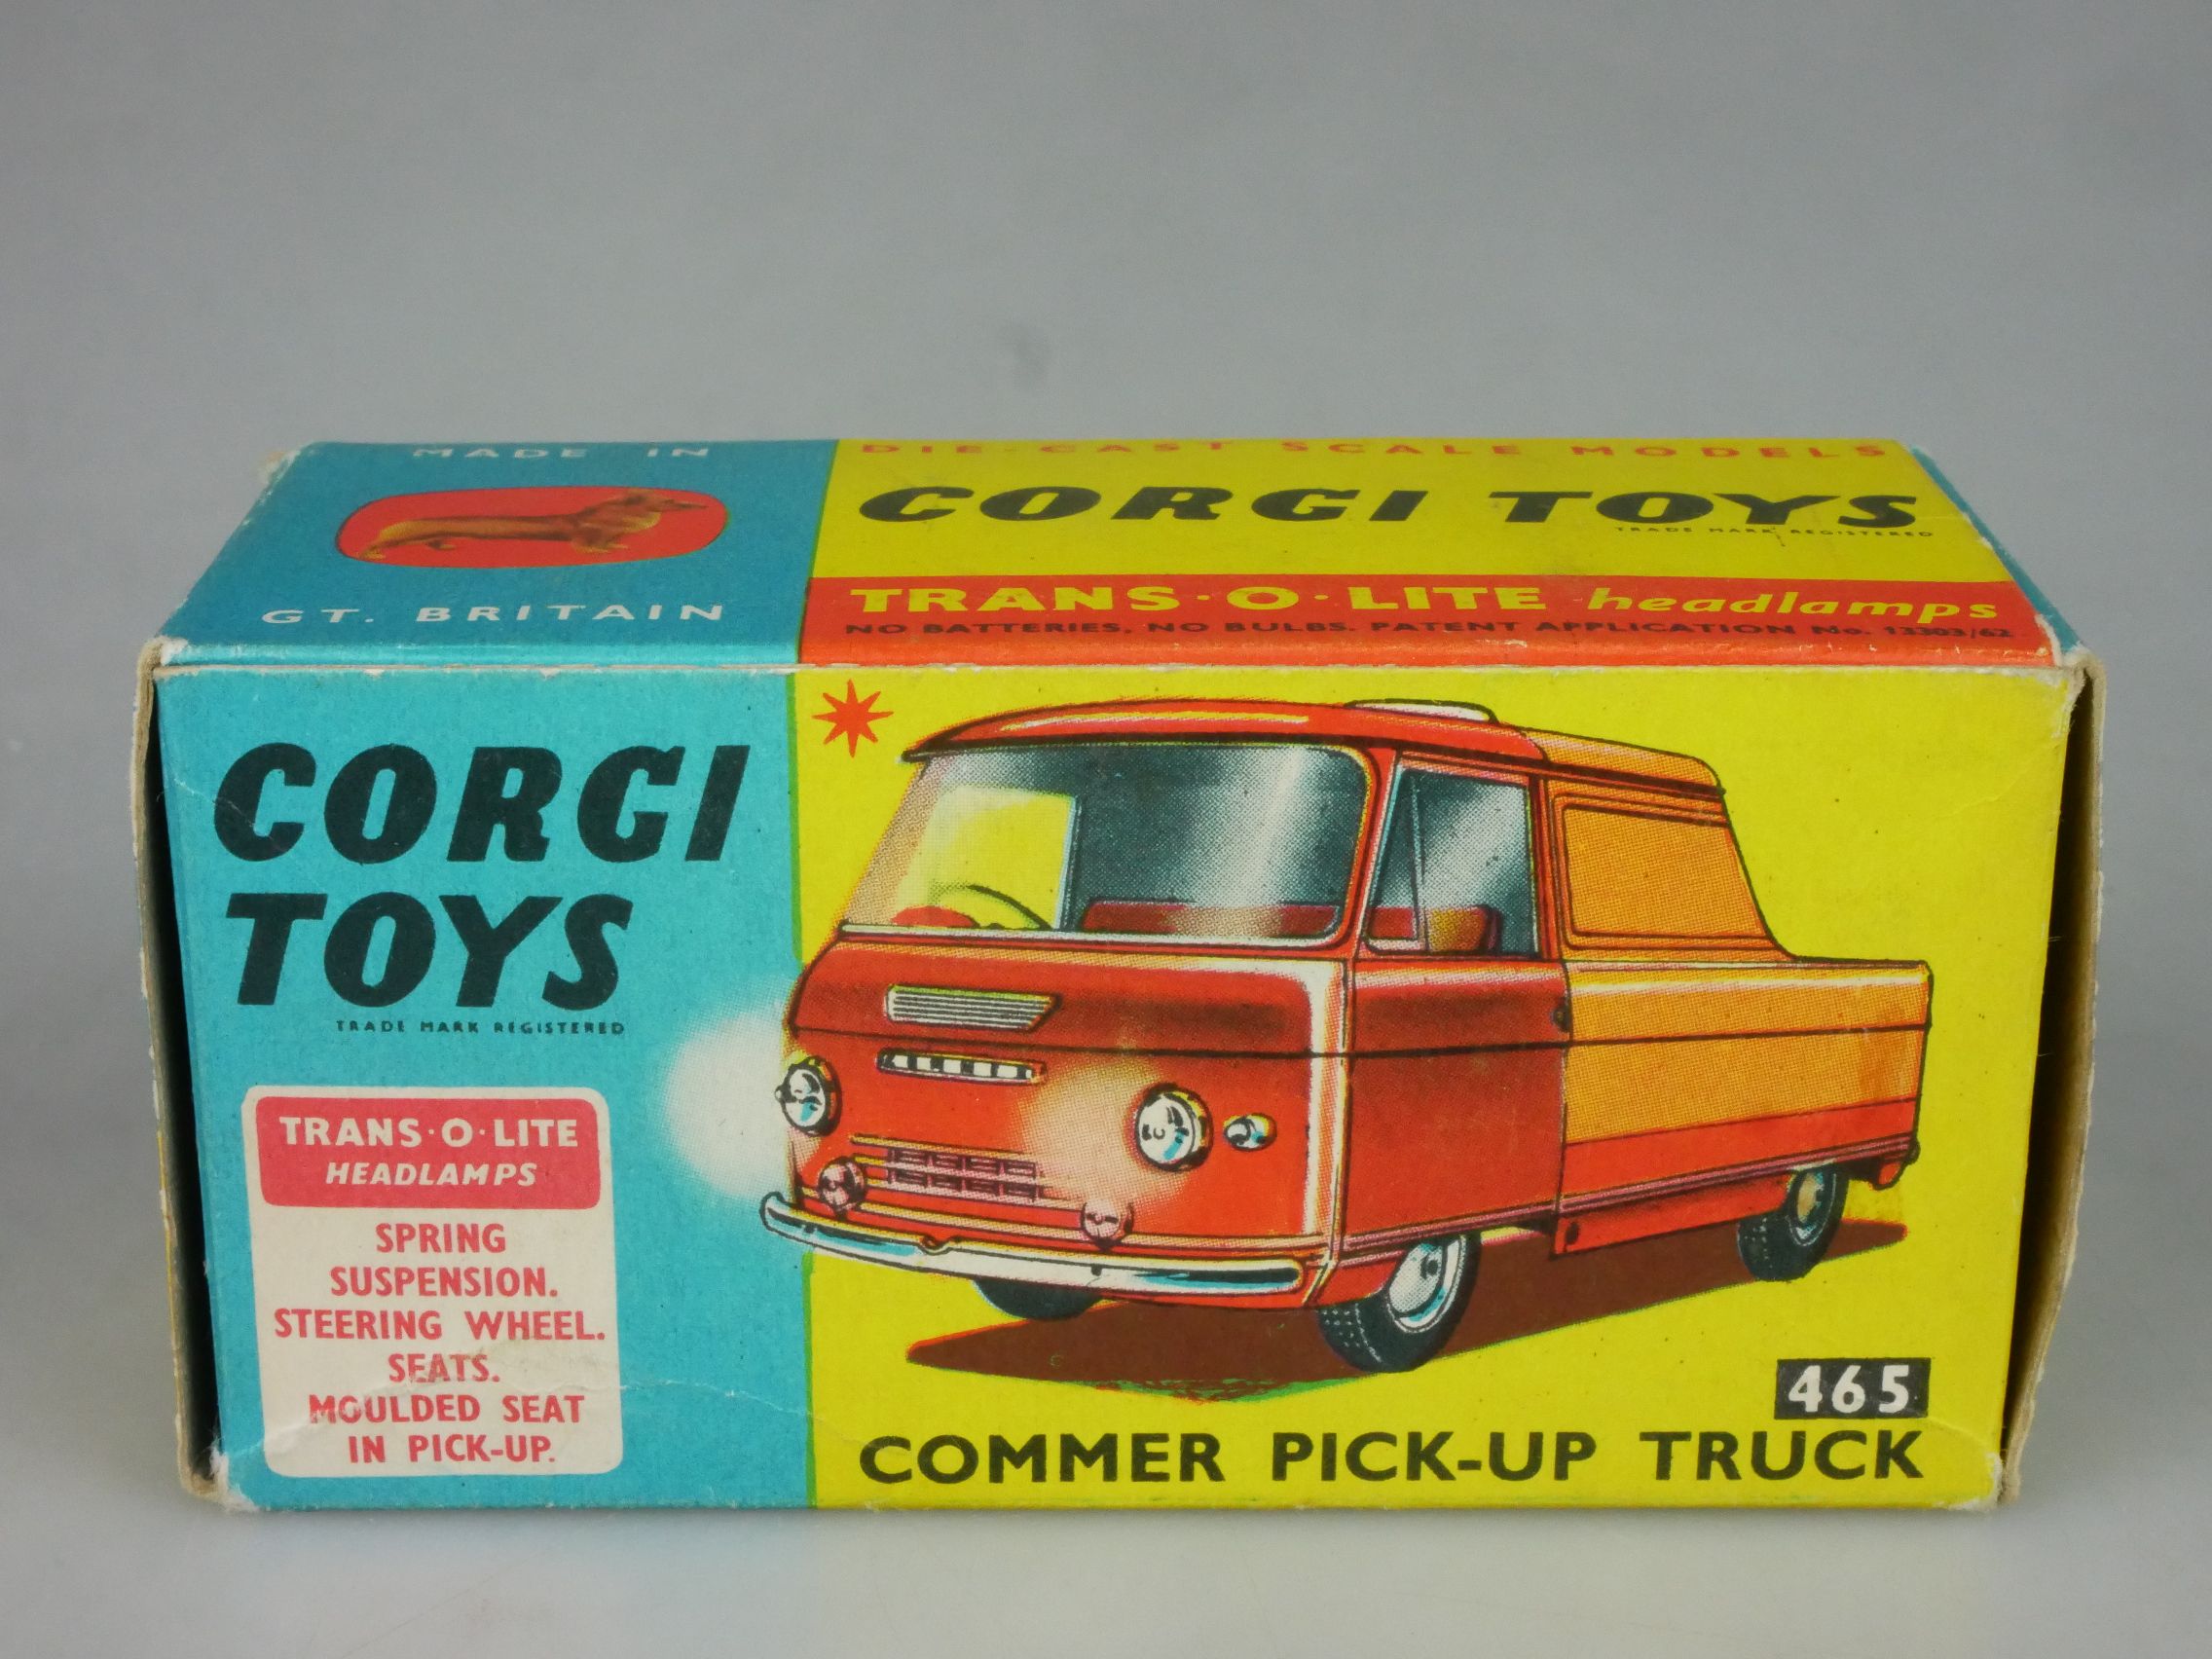 Corgi Toys 465 LEERE Original Box Commer Pick-Up Truck  empty Box 126646